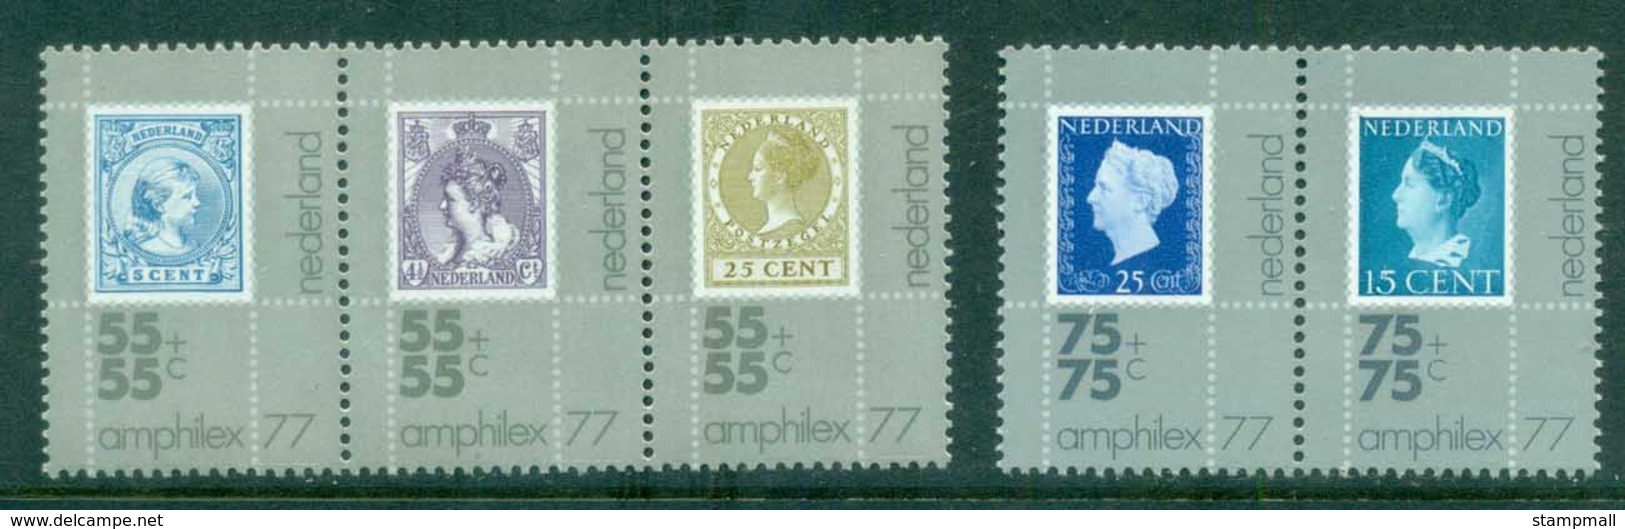 Netherlands 1976 Charity, Amphilex Stamp Ex. Str + Pr MUH Lot76582 - Unclassified